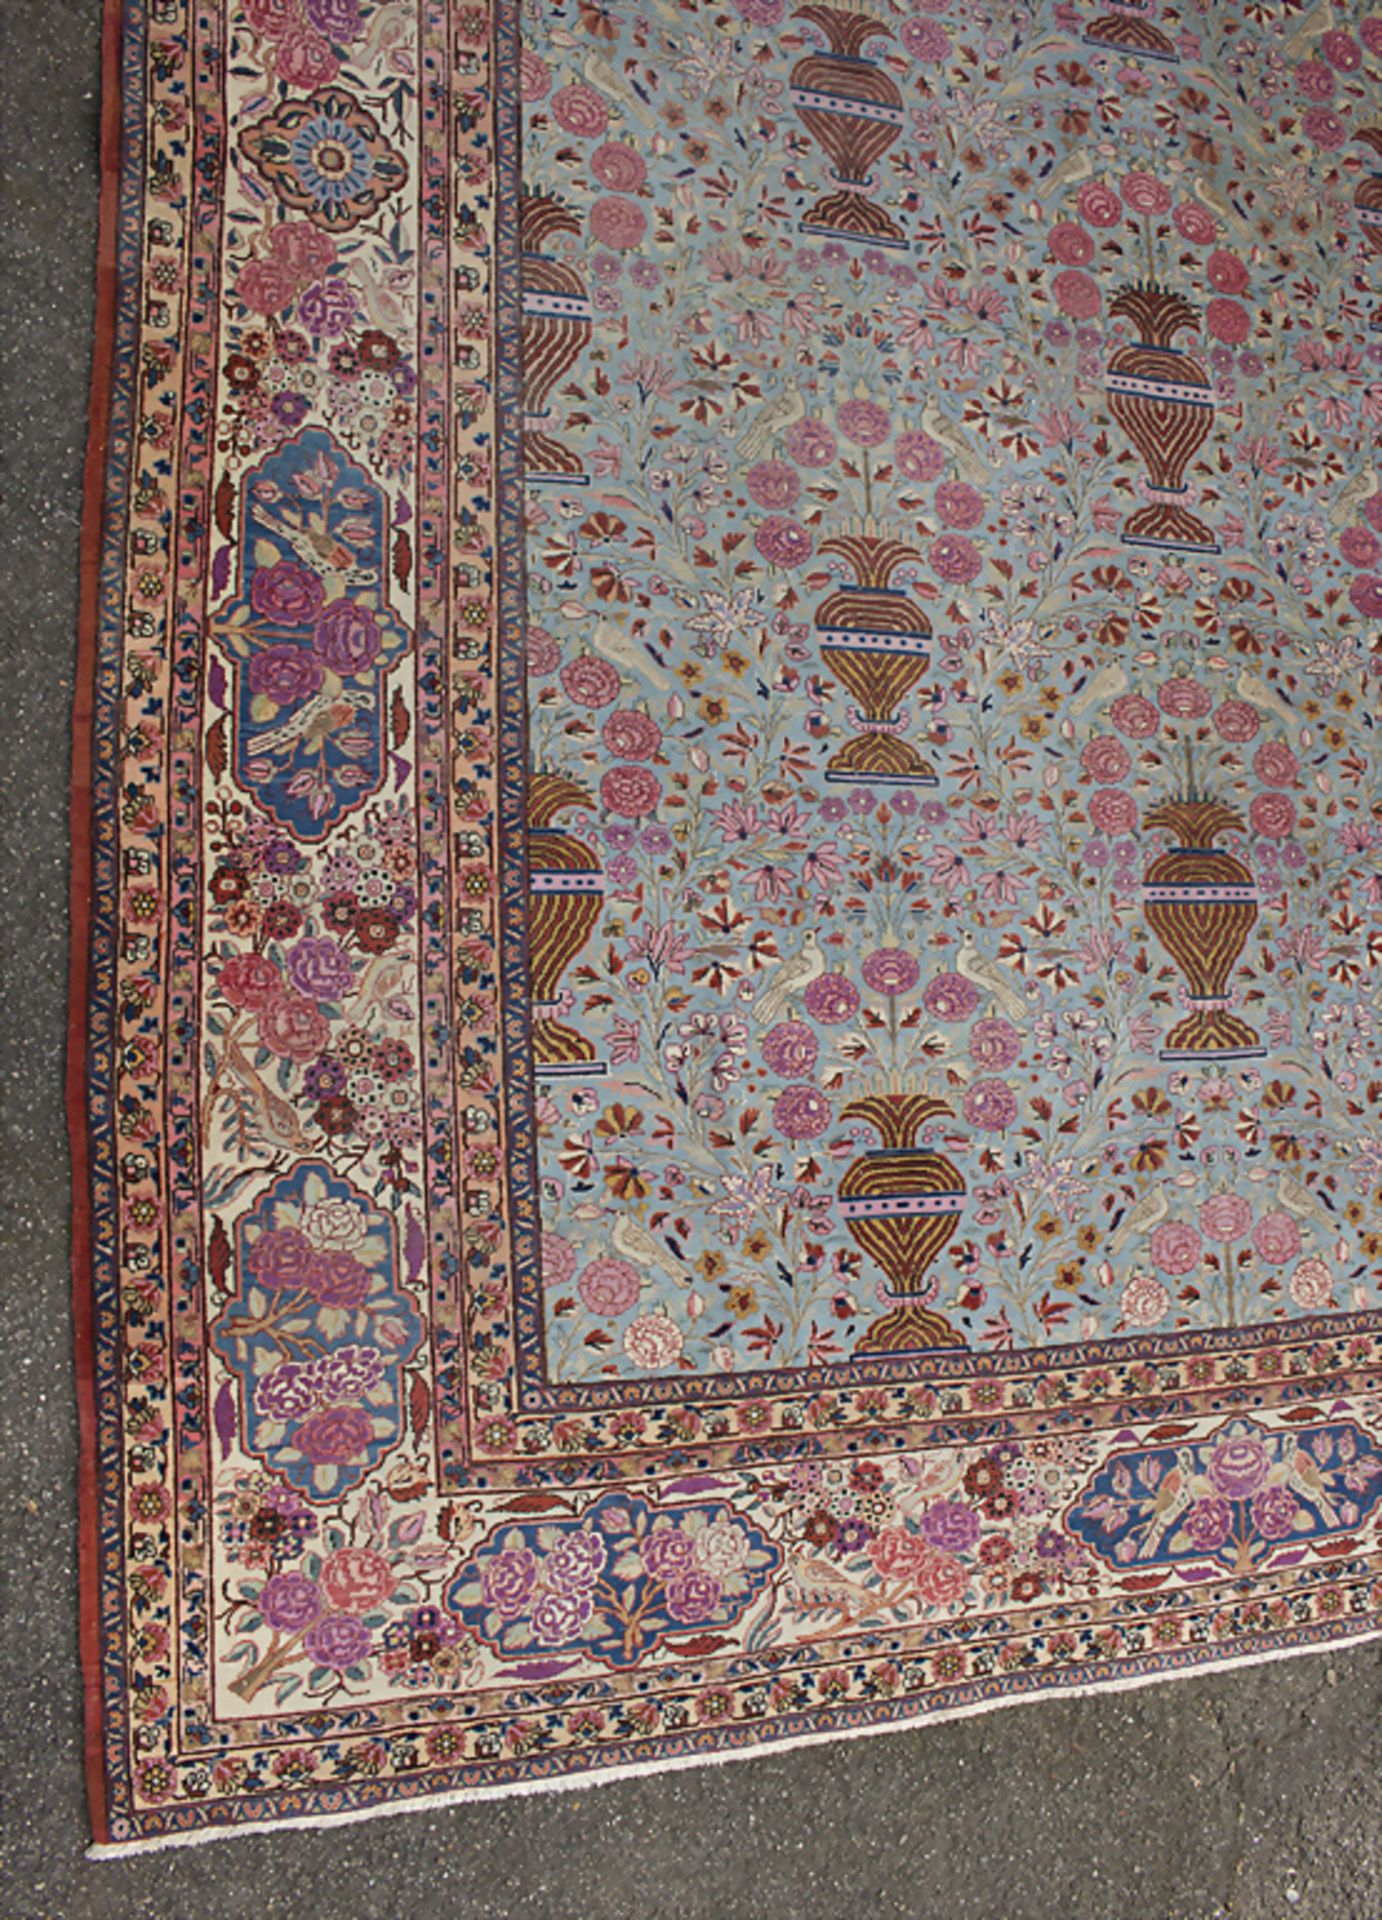 Teppich / A carpet - Image 4 of 5